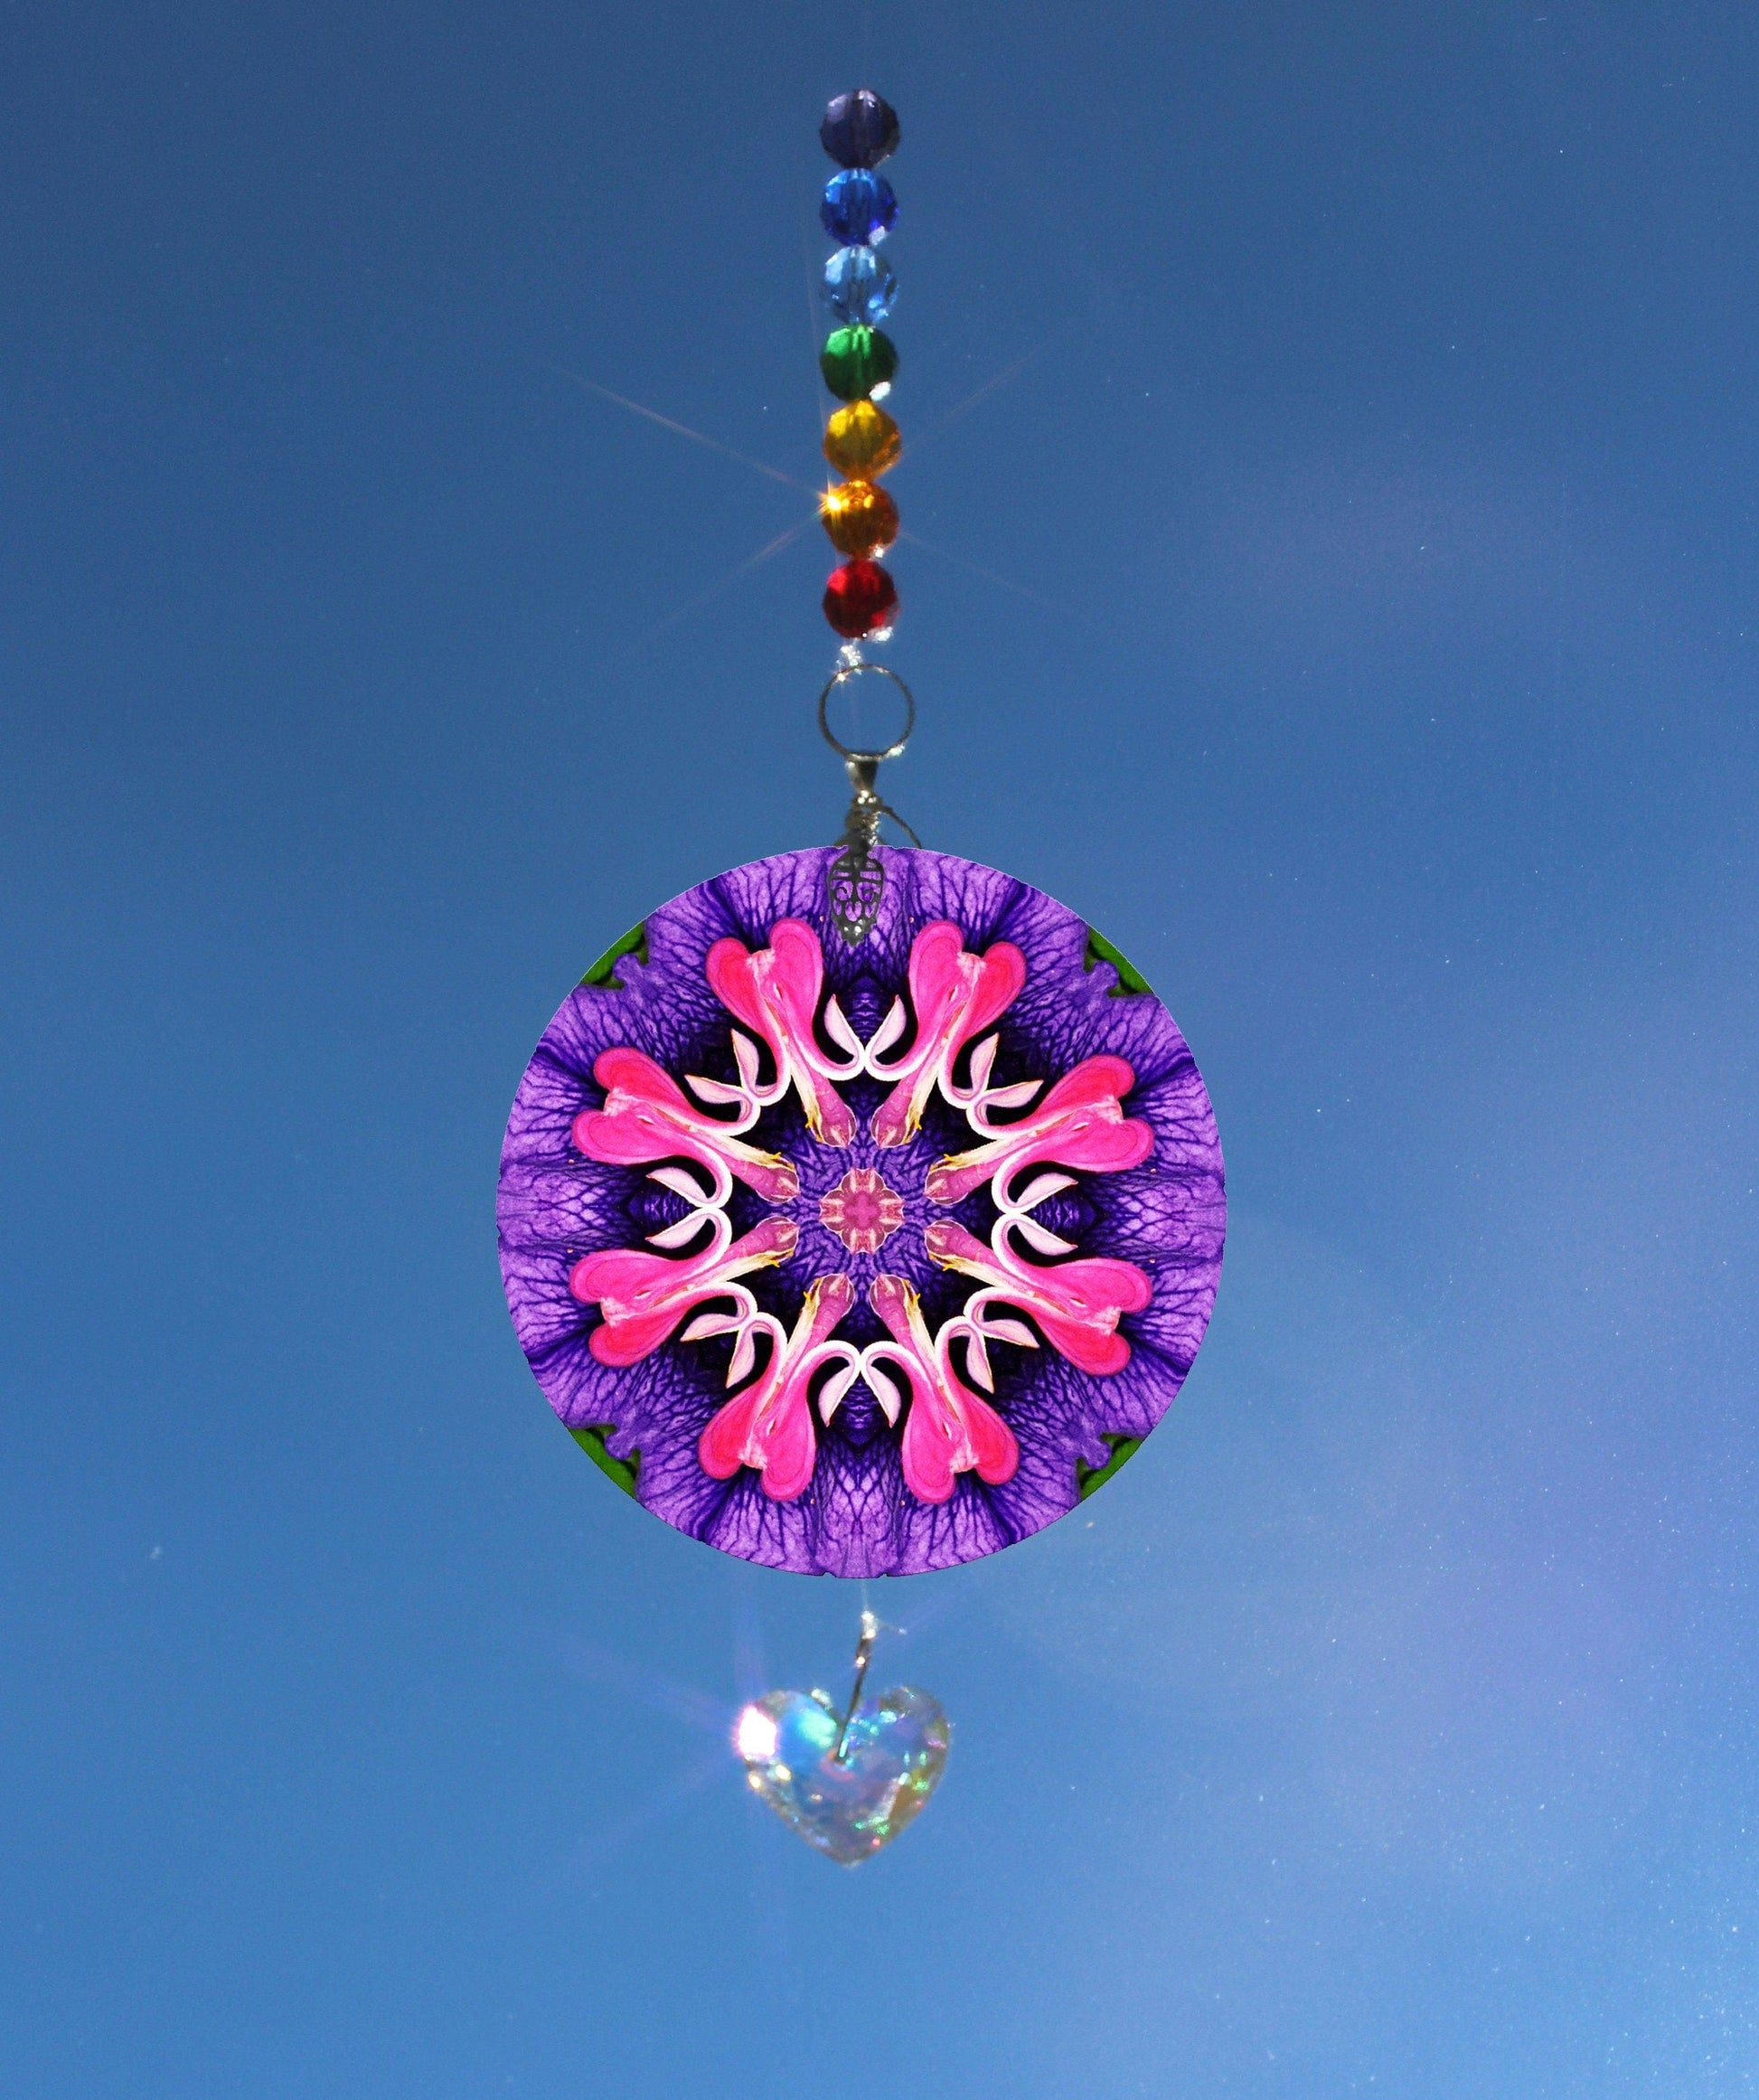 Heart Flower Suncatcher, Sacred Geometry Mandala, Window Décor, Sunlight Catcher, Crystal Art Gifts, Hippie Decorations, Unique Gifts Women